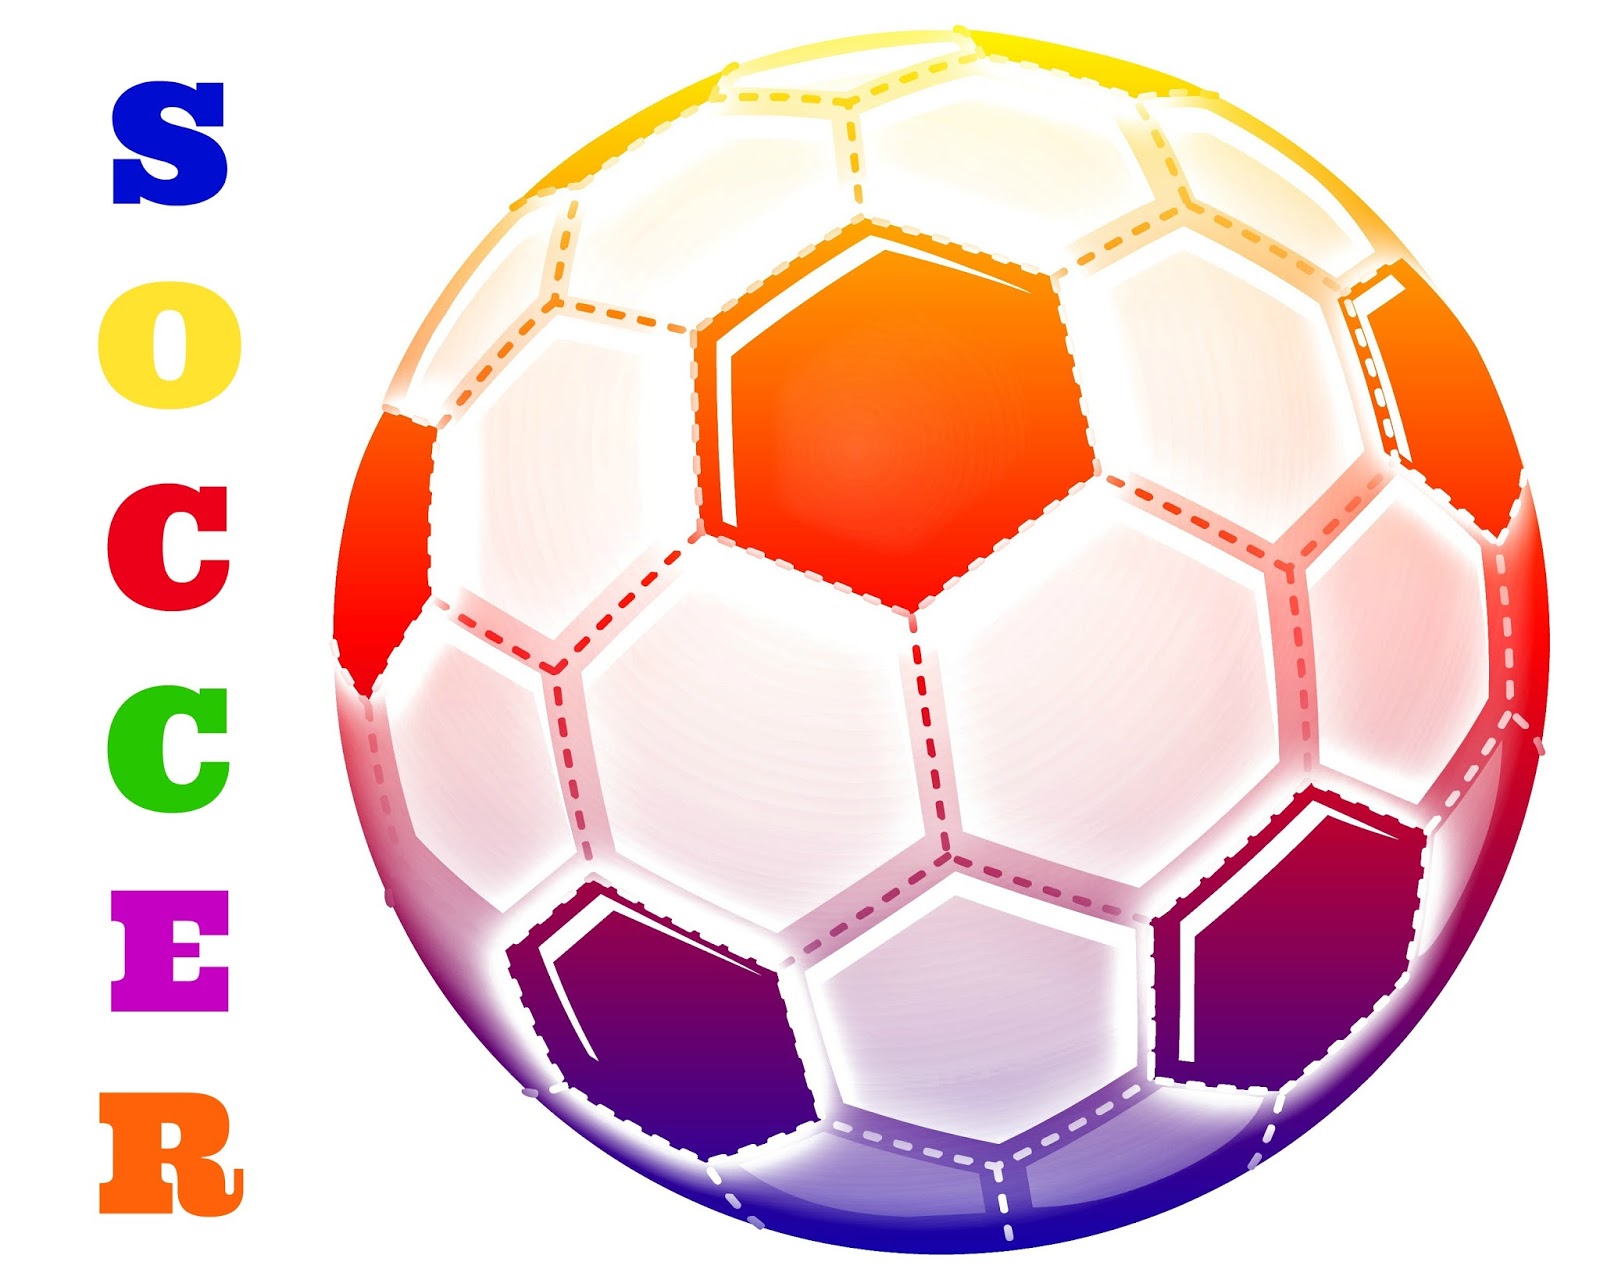 printable-soccer